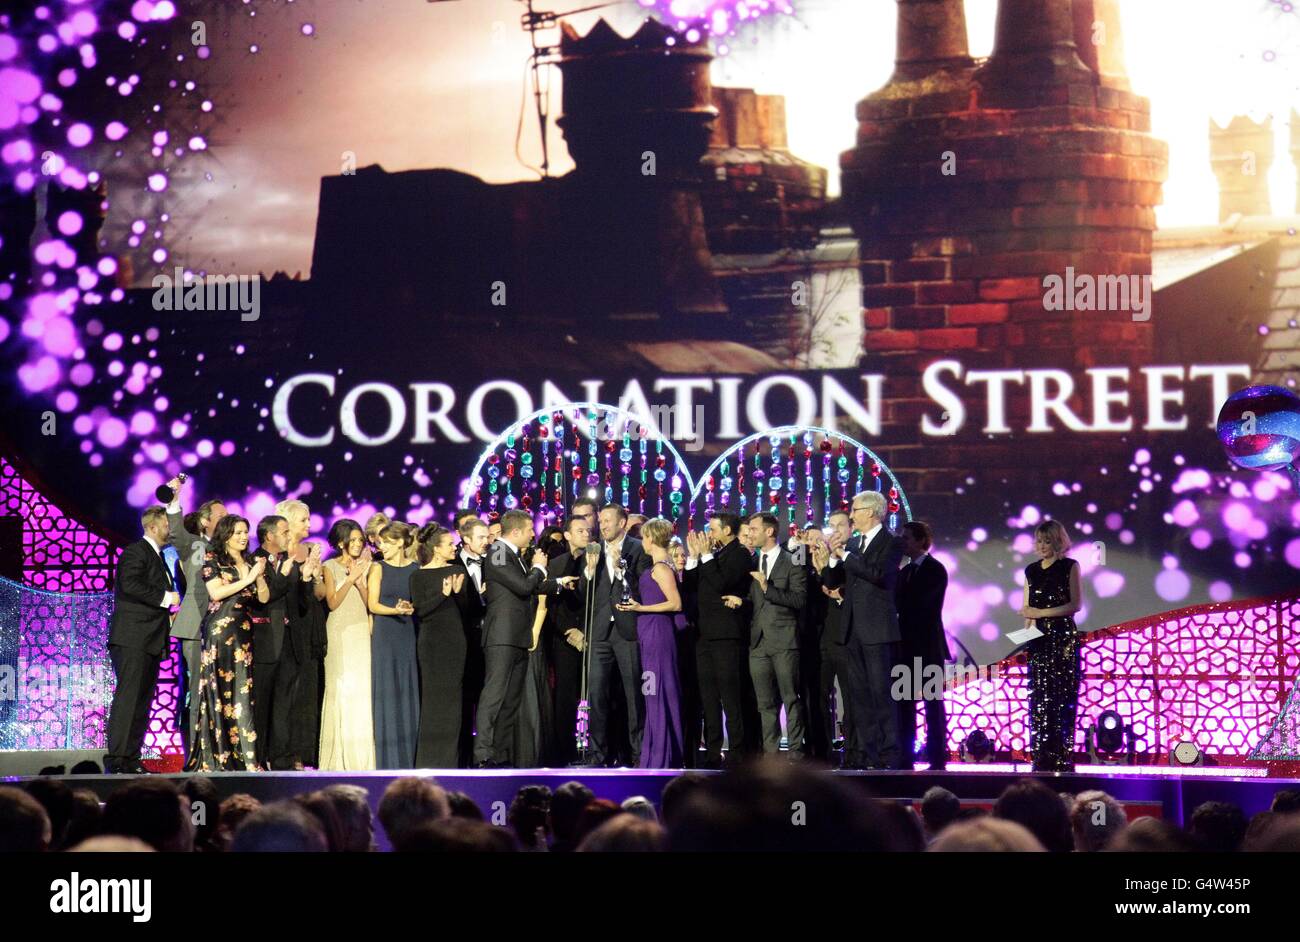 National Television Awards 2012 - Show - London Stock Photo